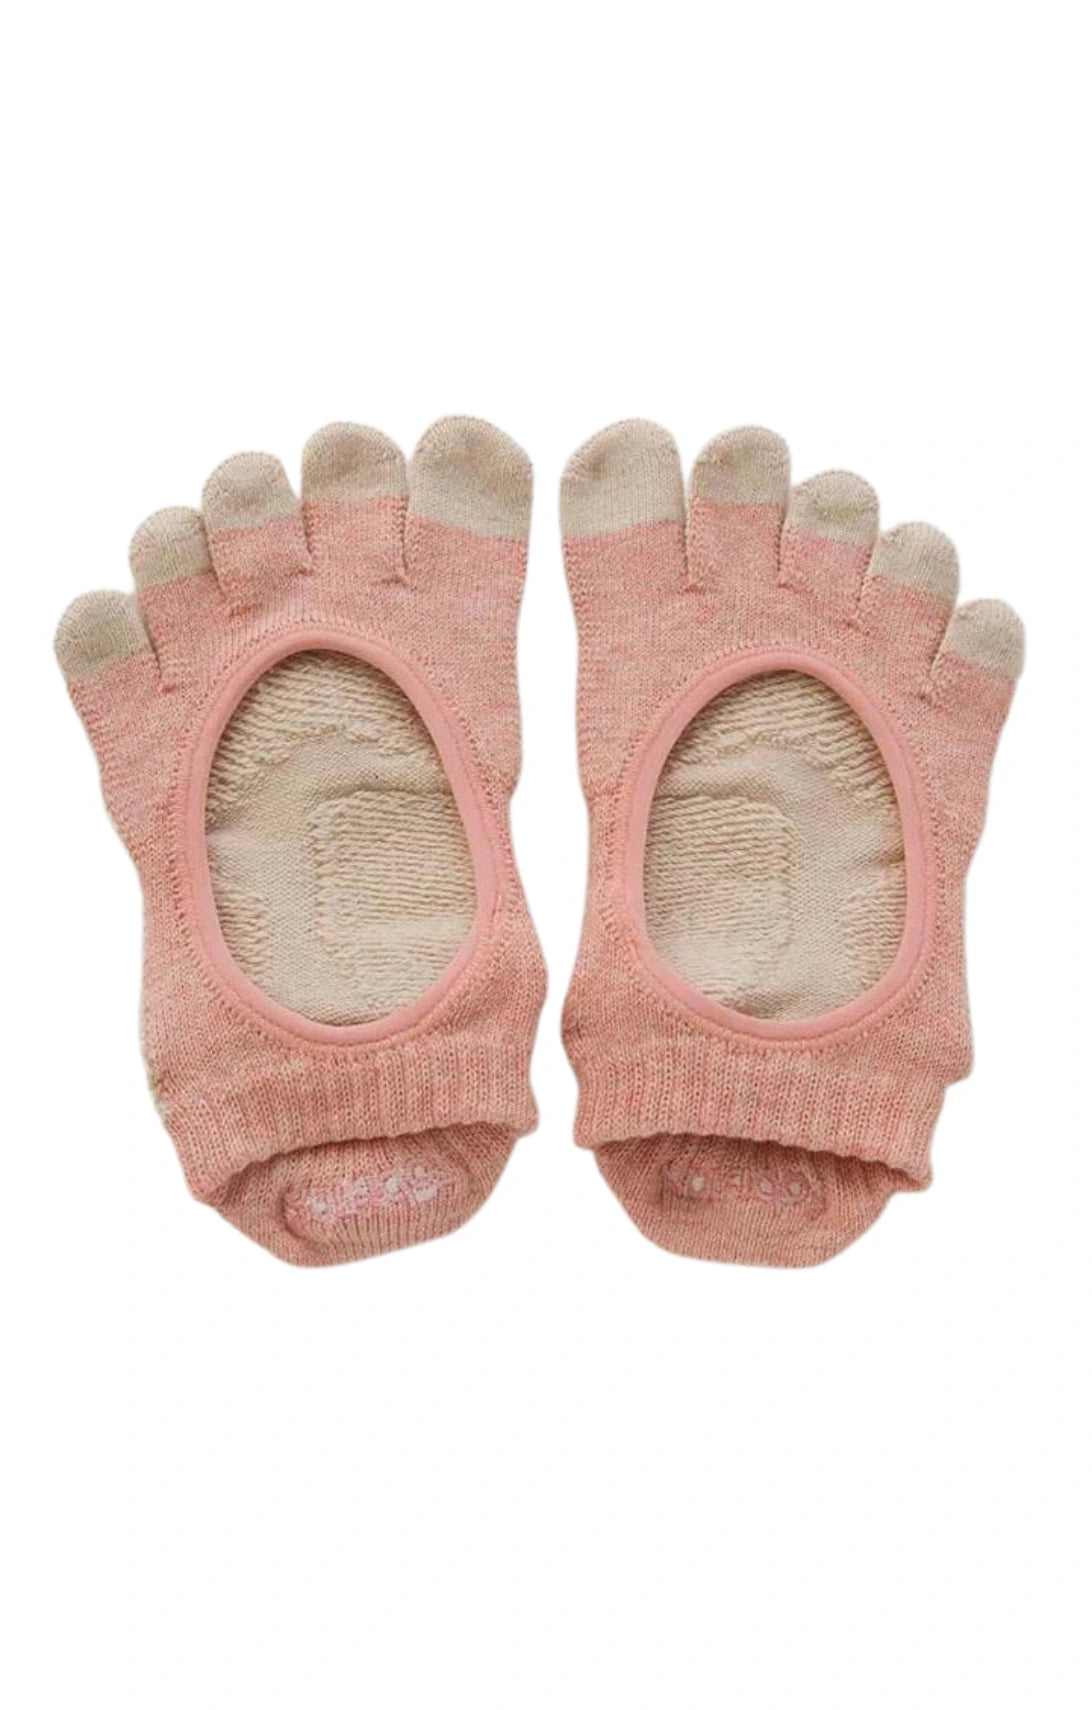 Knitido plus Botanical Dyed Footie *Grip+Power Pads* Grip Socks in Pink